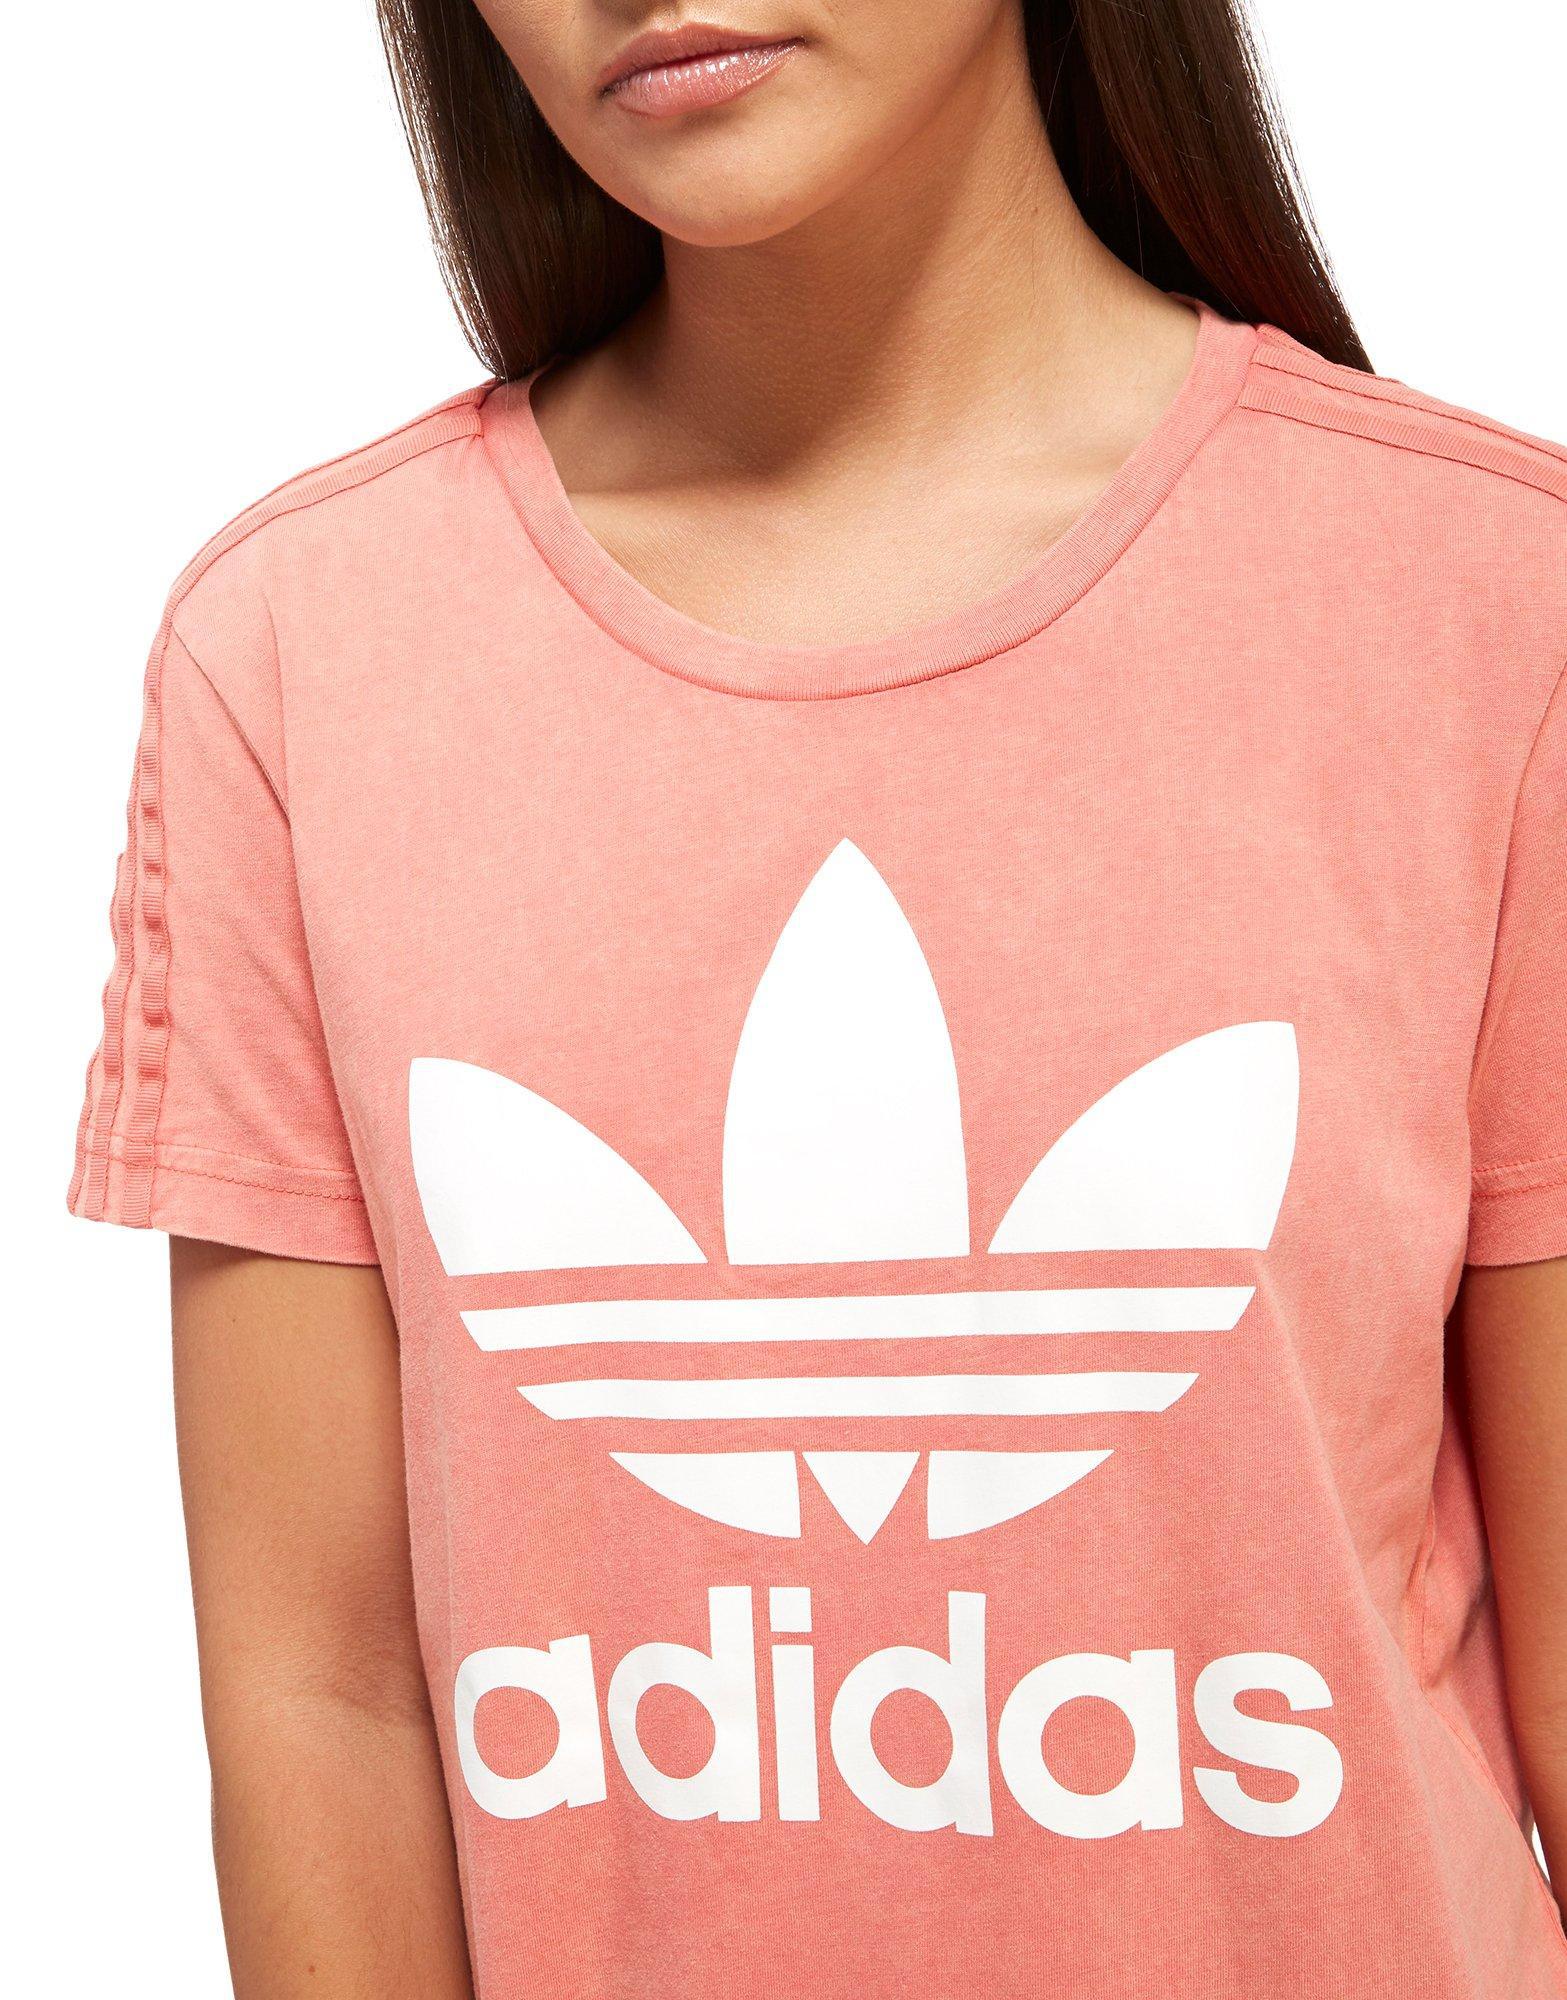 adidas pink t shirt dress